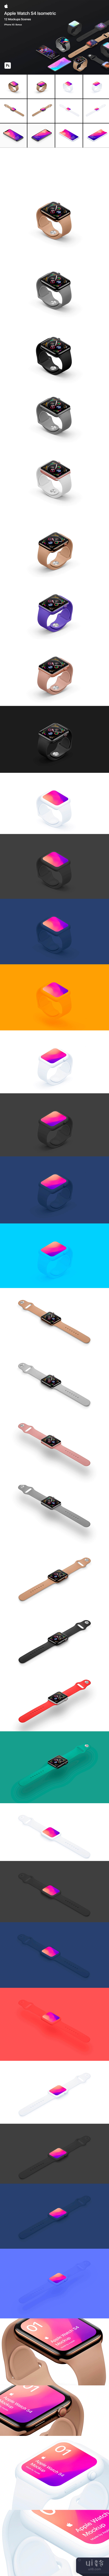 苹果手表S4 12 (Apple Watch S4 12)插图